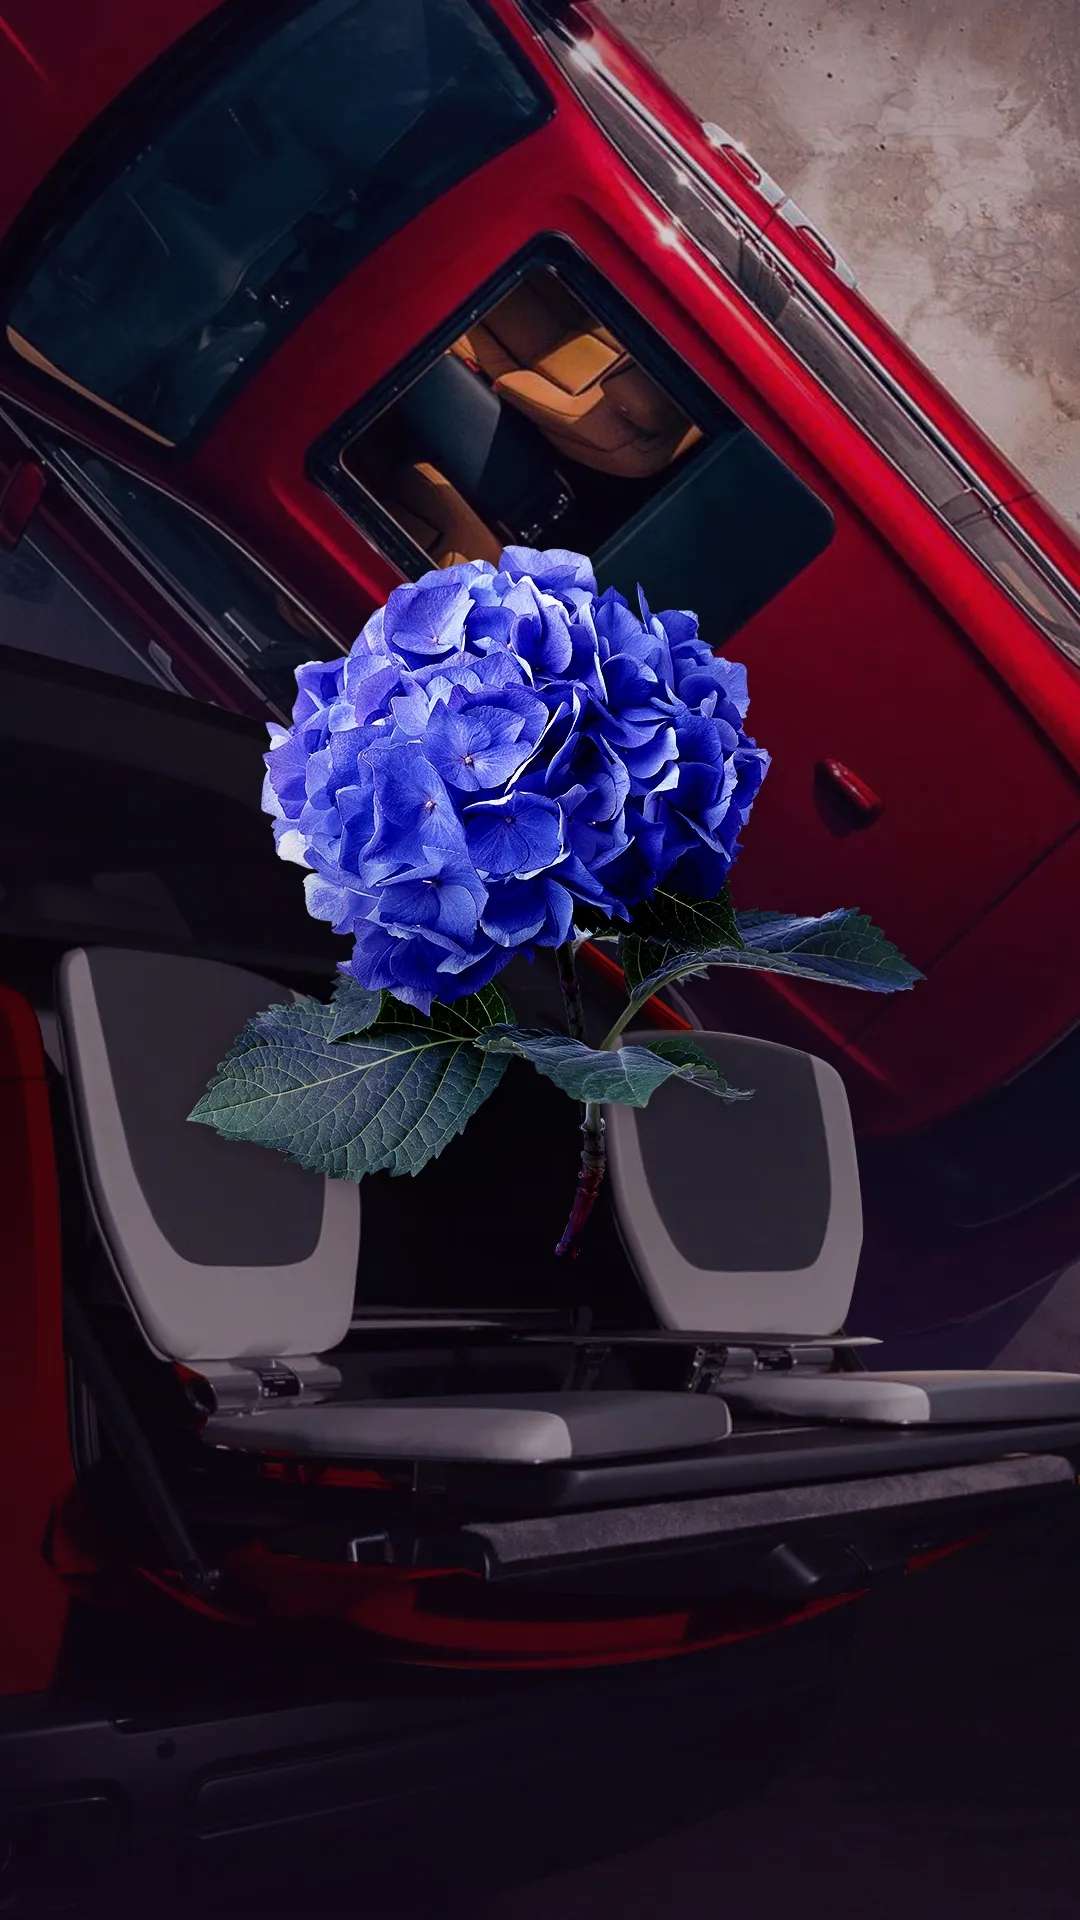 Rolls Royce Cullinan Car Vehicle Red Cars Flowers 1080x1920